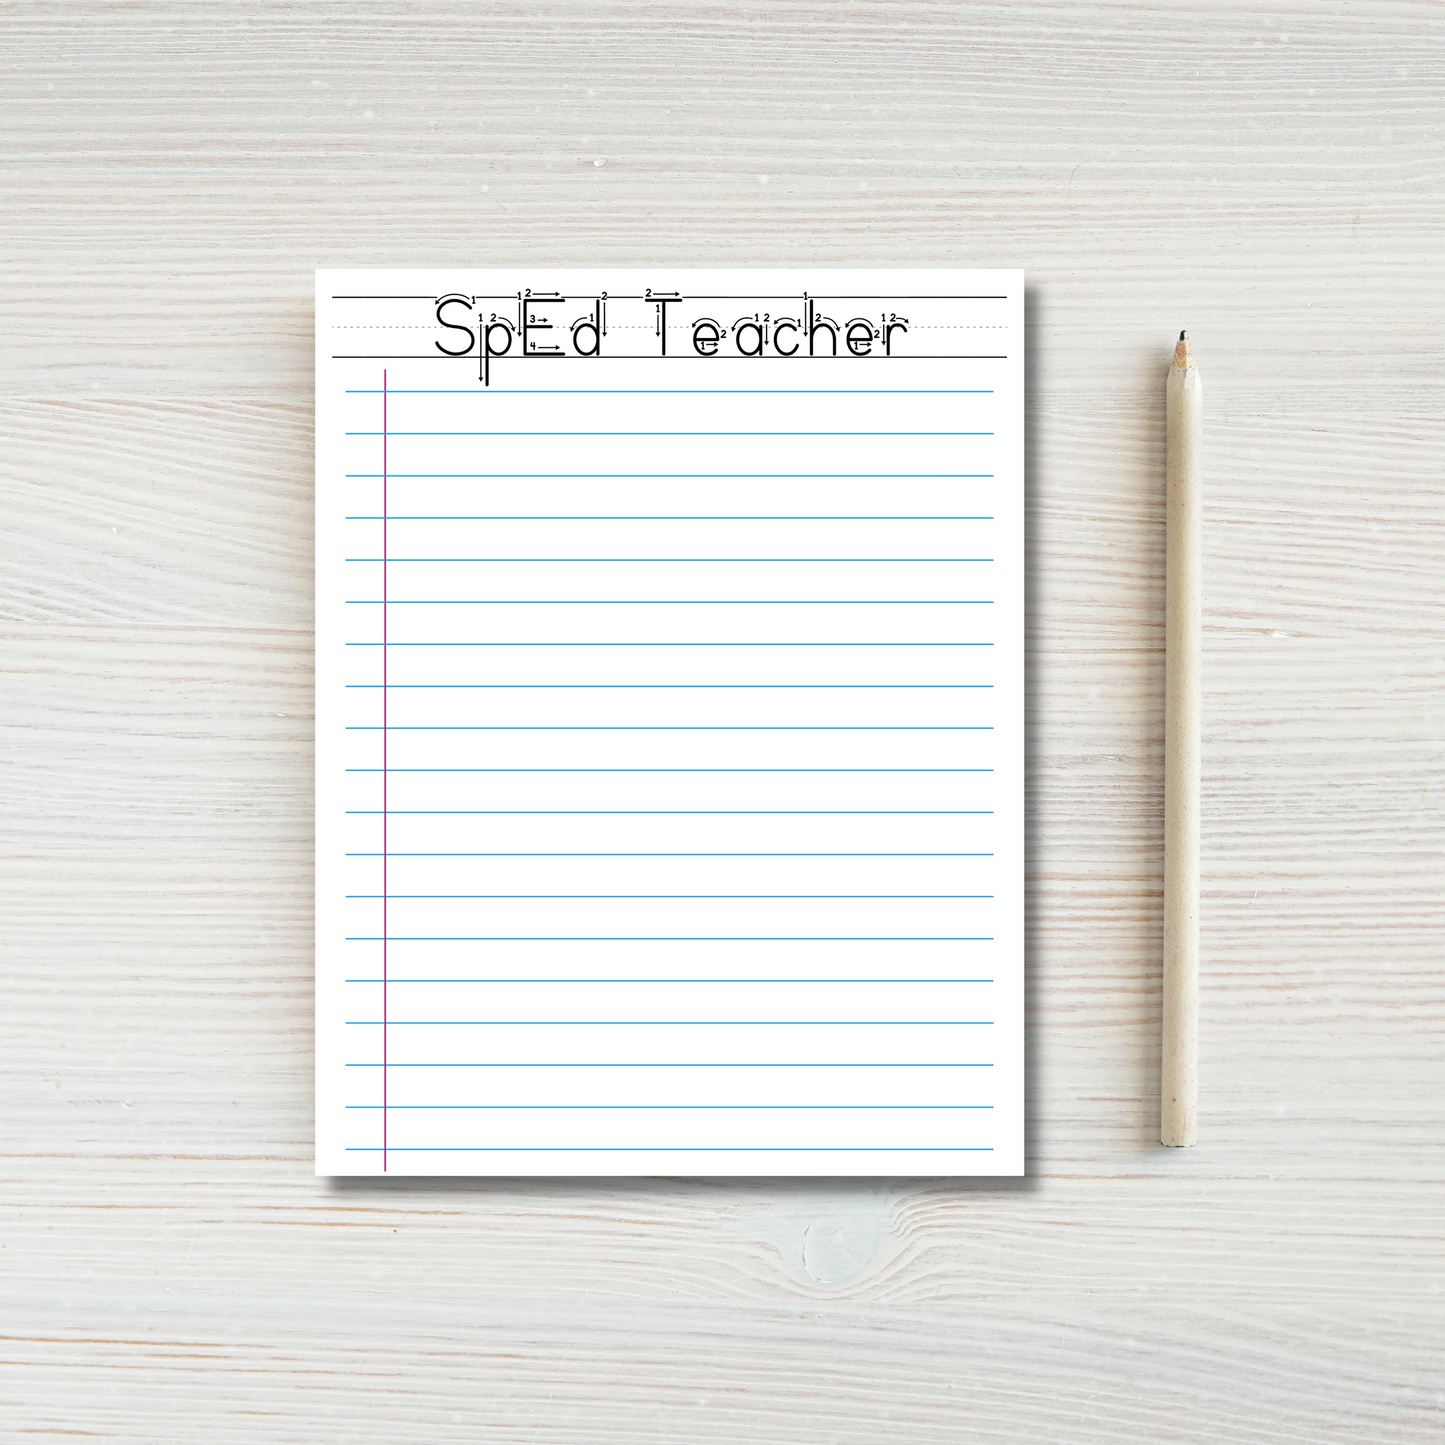 SpEd Teacher School Days Notepad